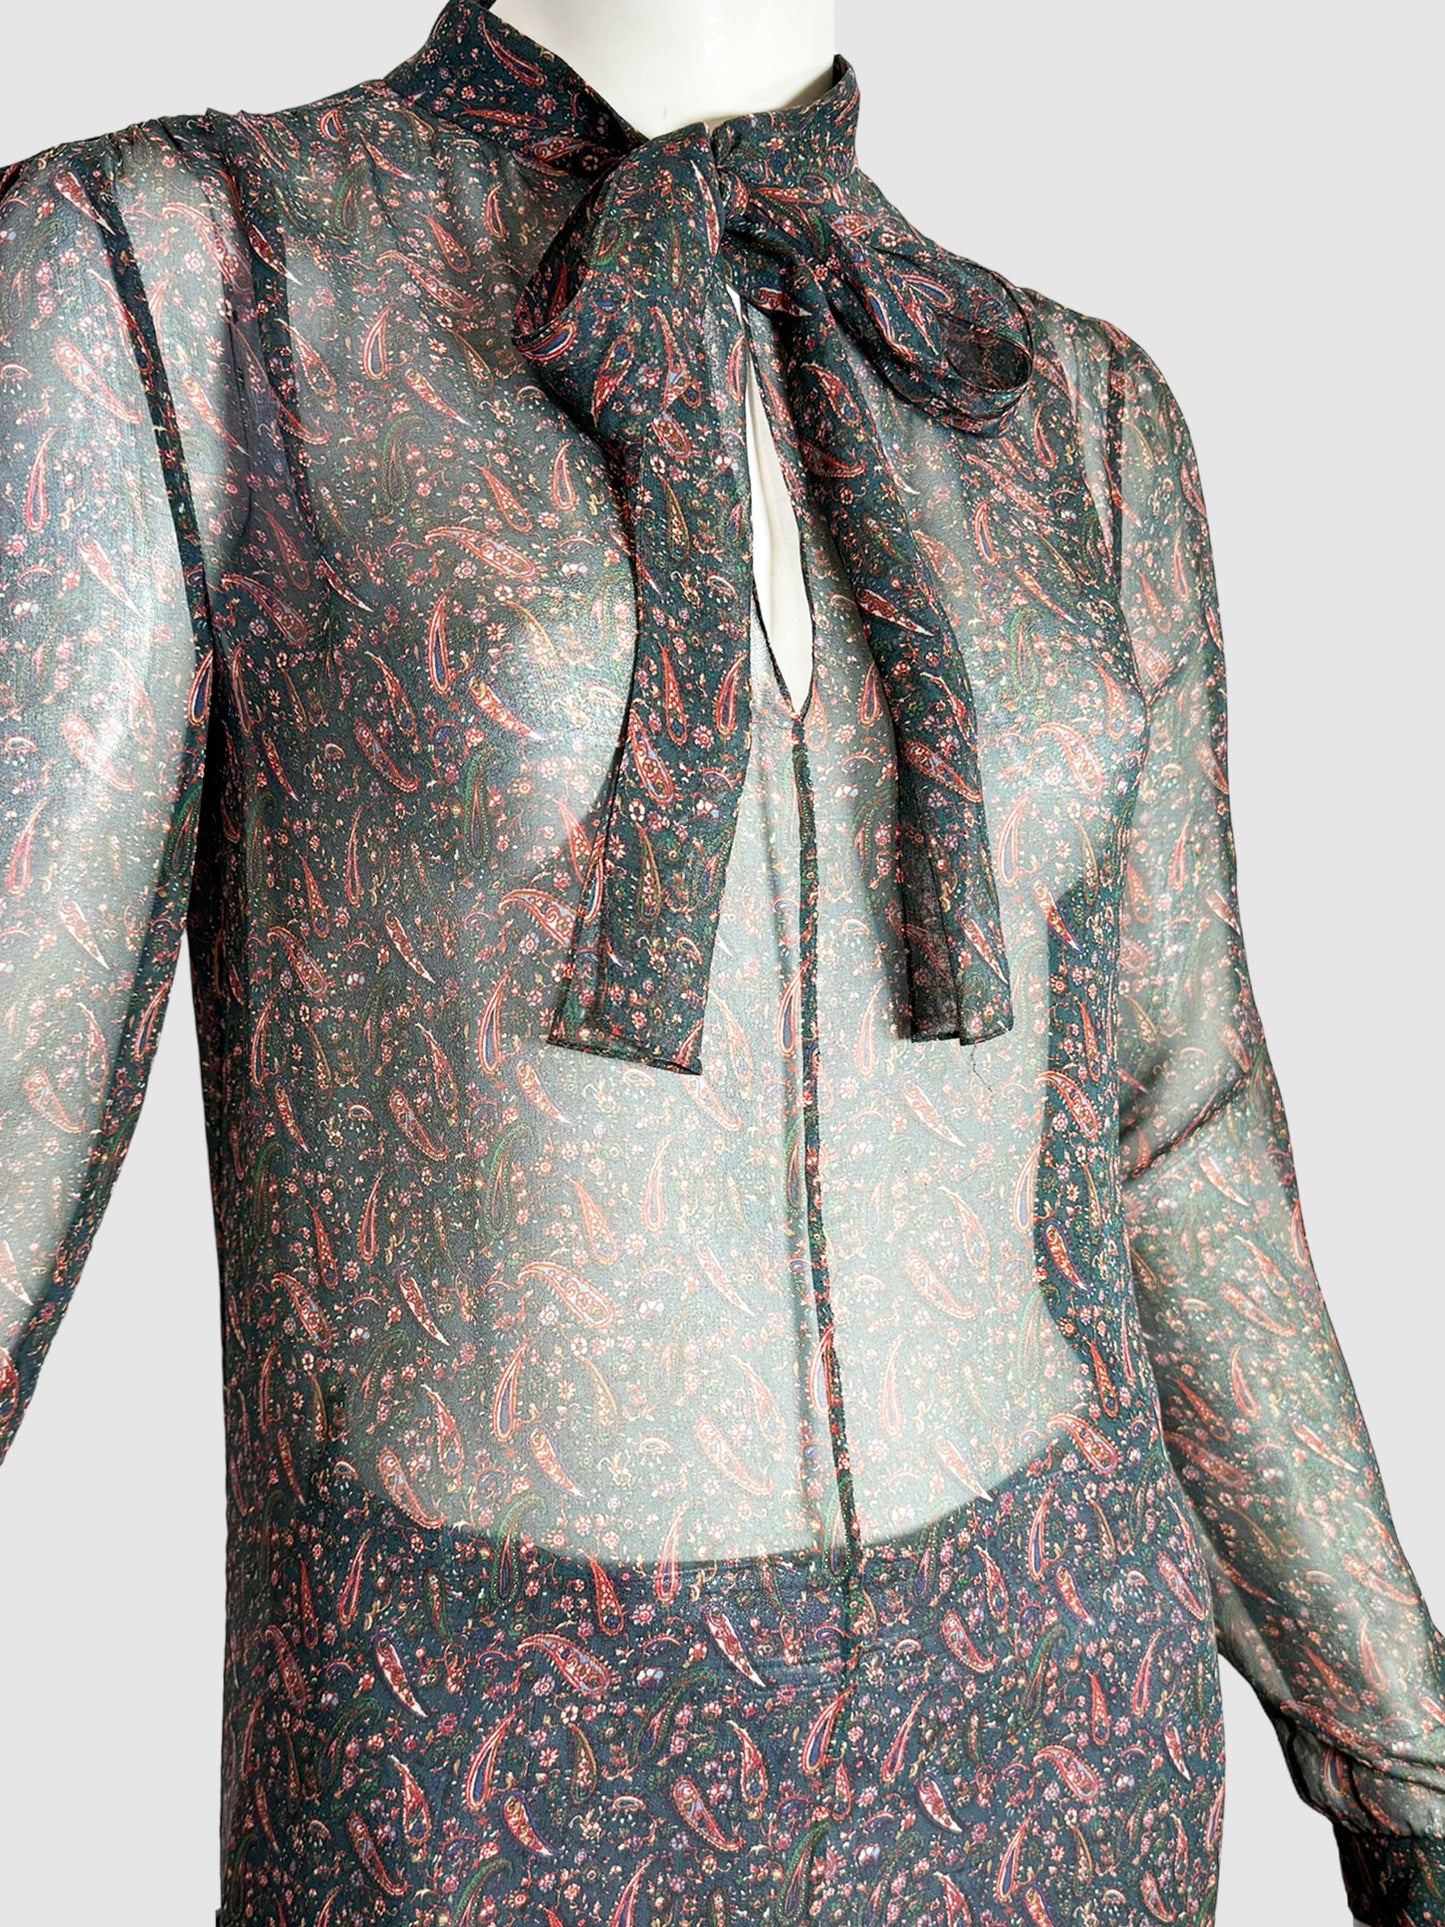 Sheer Paisley Print Silk Blouse - Size S